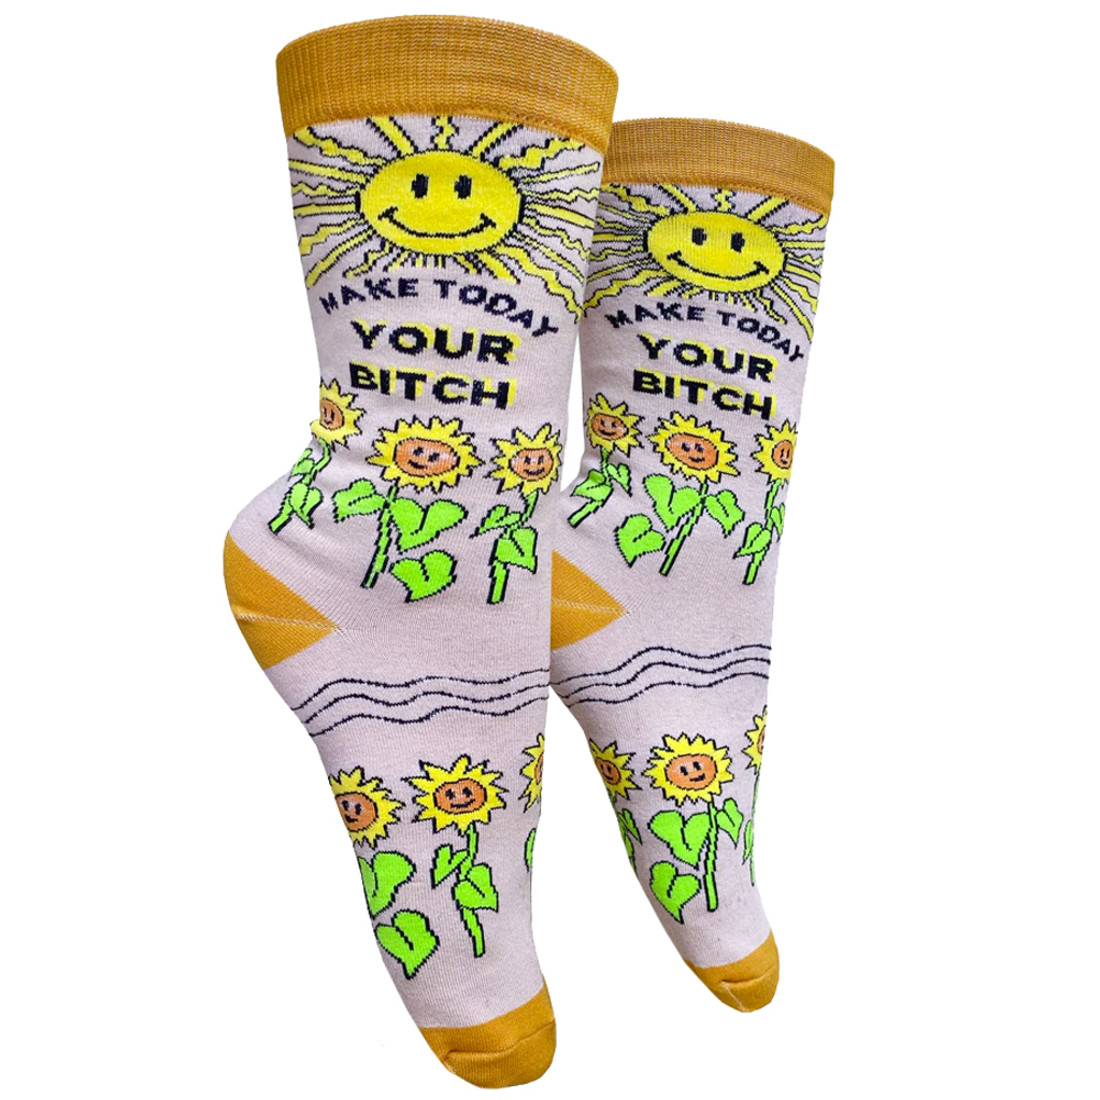 Make Today Your Bitch Women's Socks